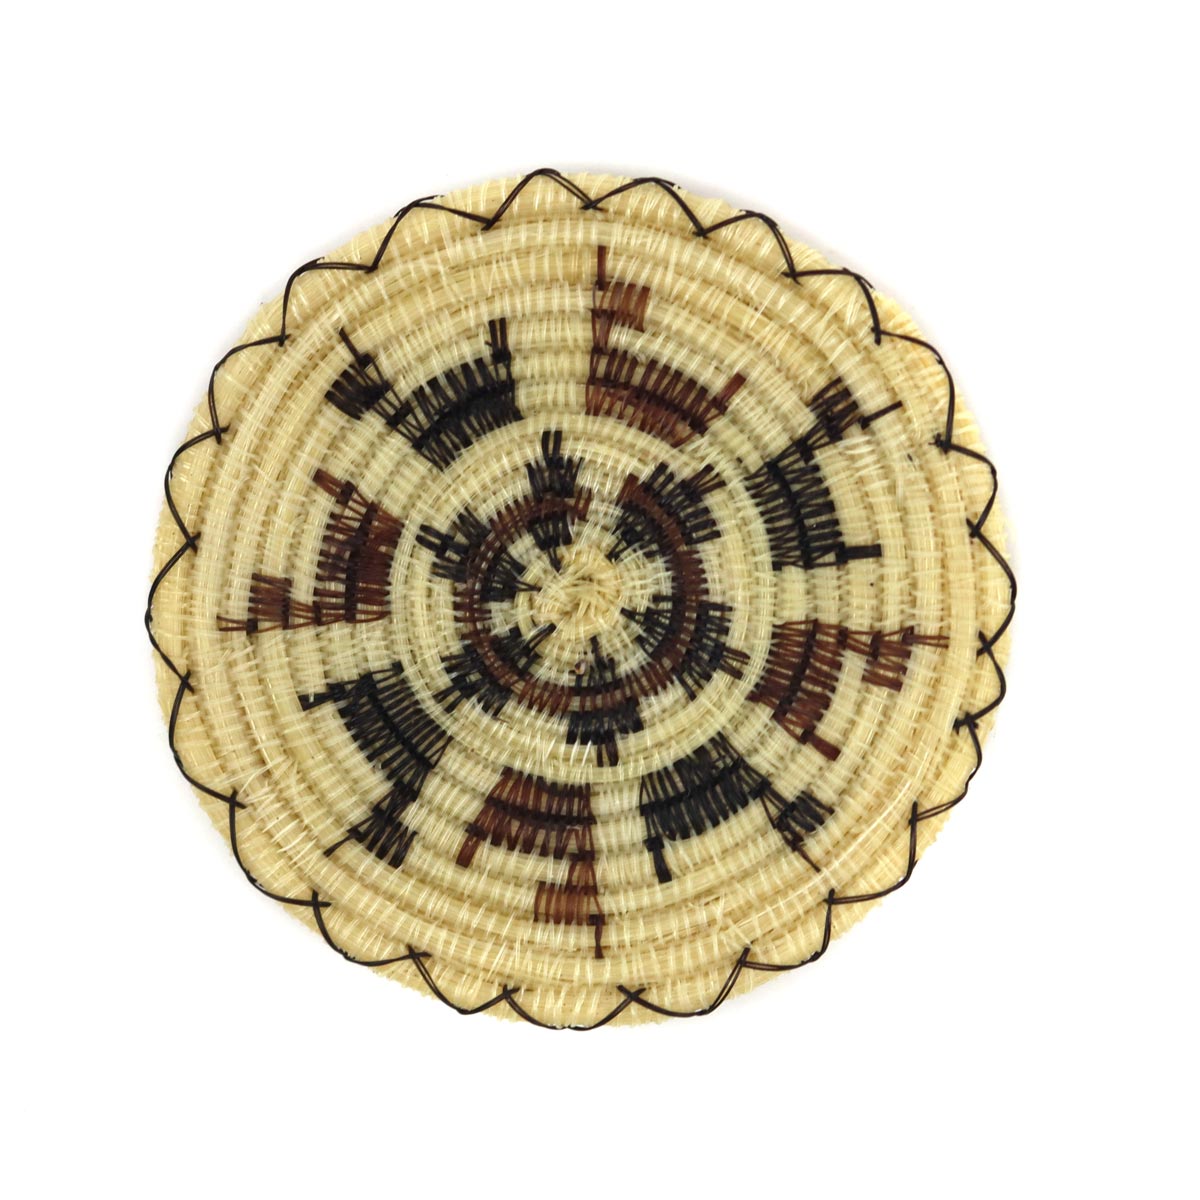 Tohono O'odham Contemporary Miniature Polychrome Horsehair Basket with Deer Pictorials, 2" diameter (SK3340)
